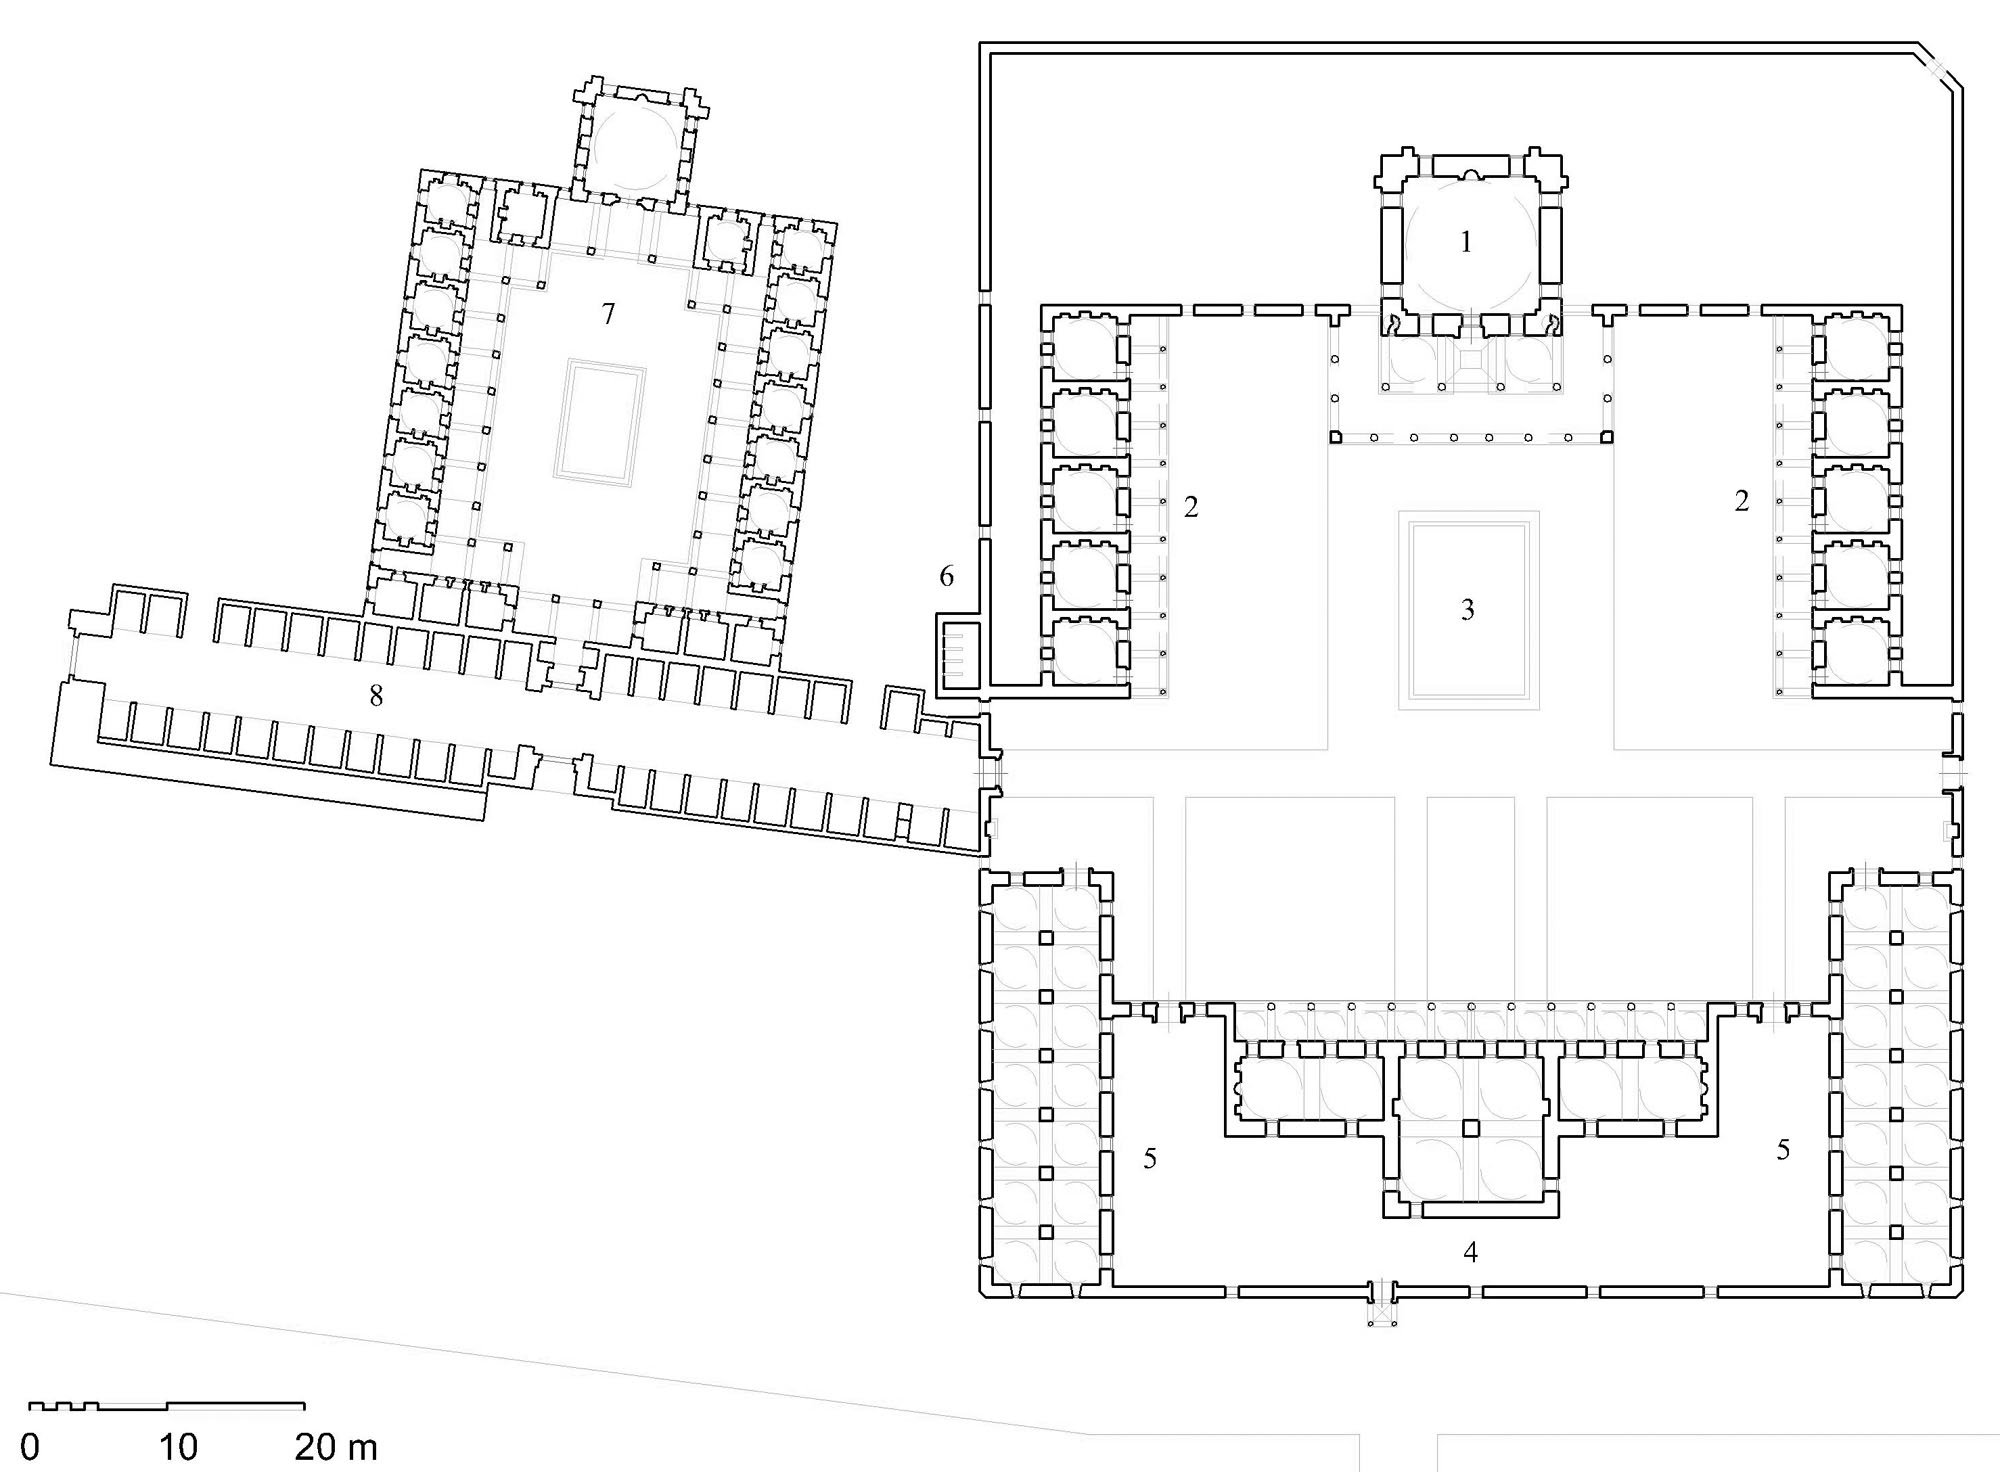 Floor plan  of complex showing (1) mosque, (2) guestrooms, (3) ablution pool, (4) hospice, (5) caravanserai with stables, (6) latrines, (7) madrasa, (8) bazaar (<i>arasta</i>)